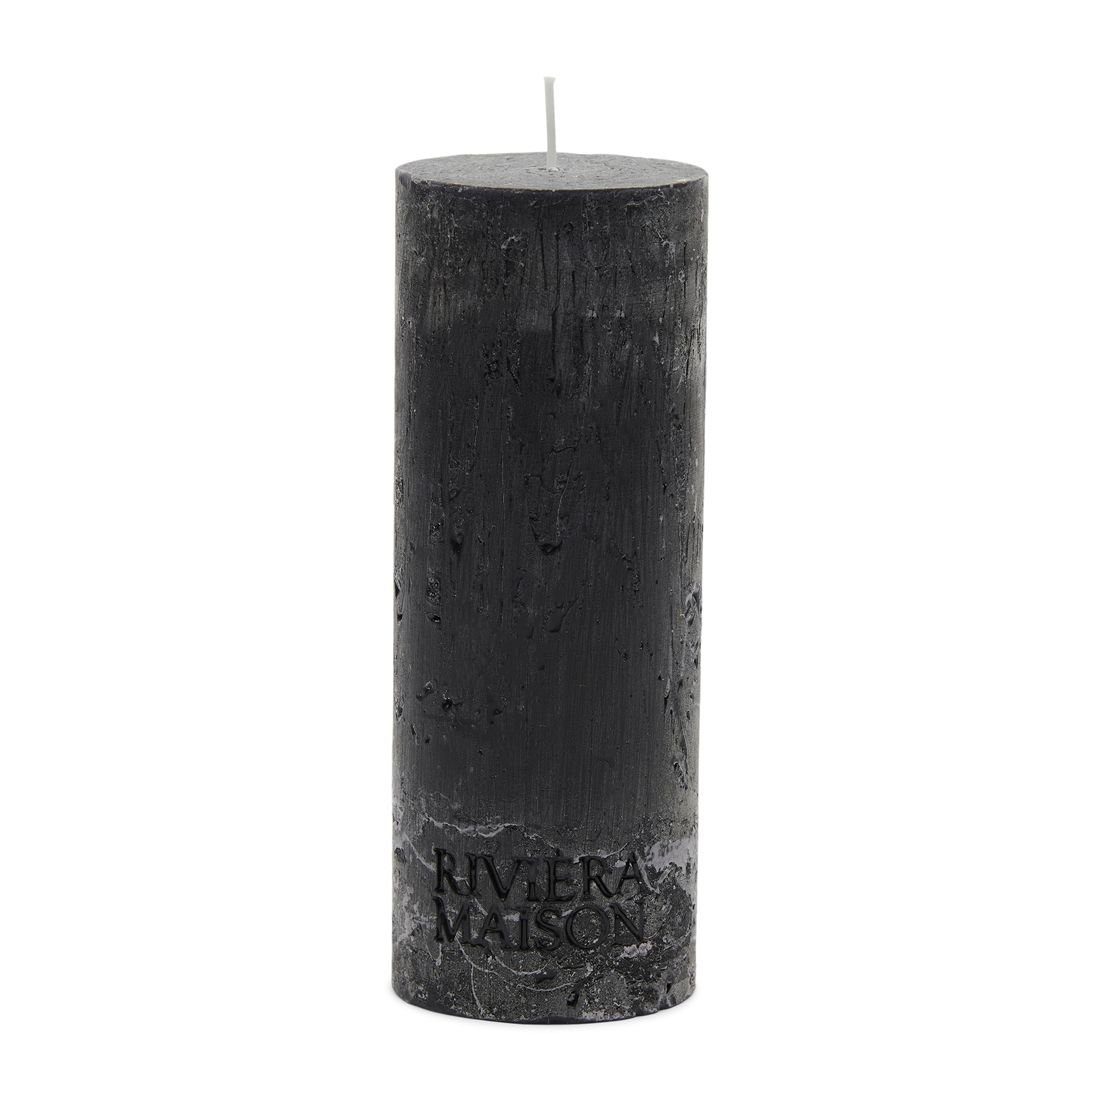 Rivièra Maison Stumpenkerze Rivièra Maison Pillar Candle Rustic black, Stumpenkerze